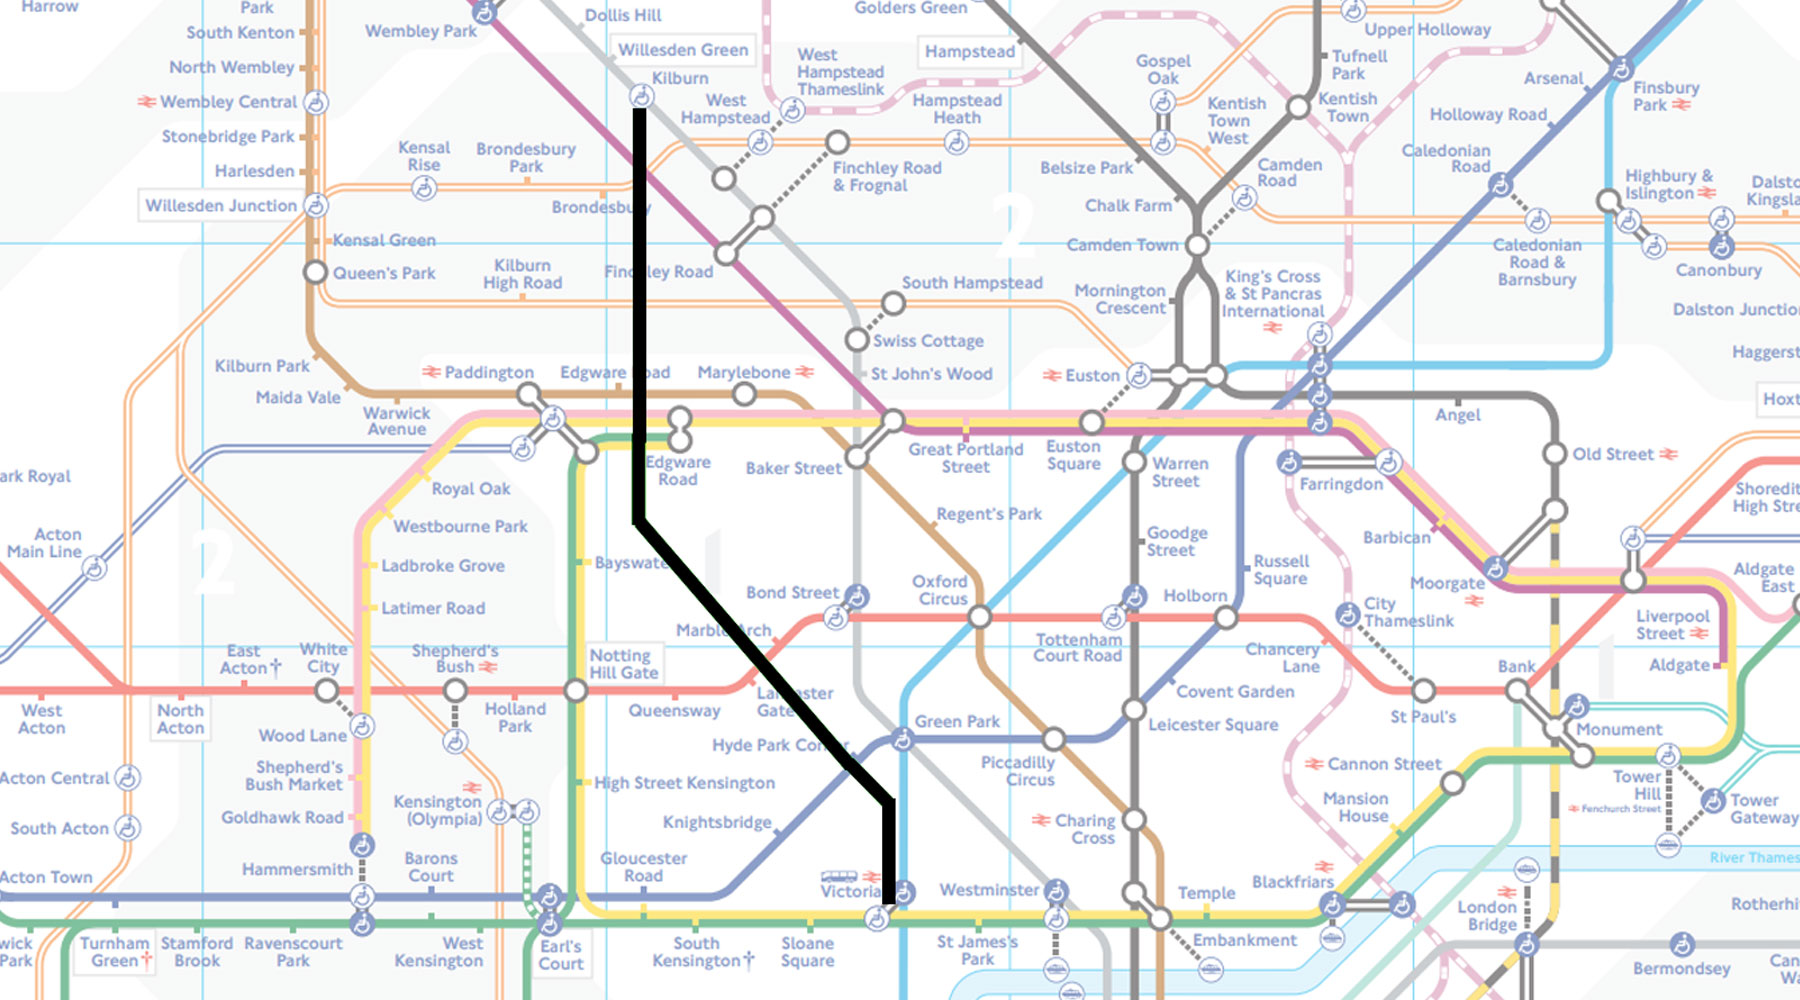 Unbuilt London: The Edgware Road and Victoria railway